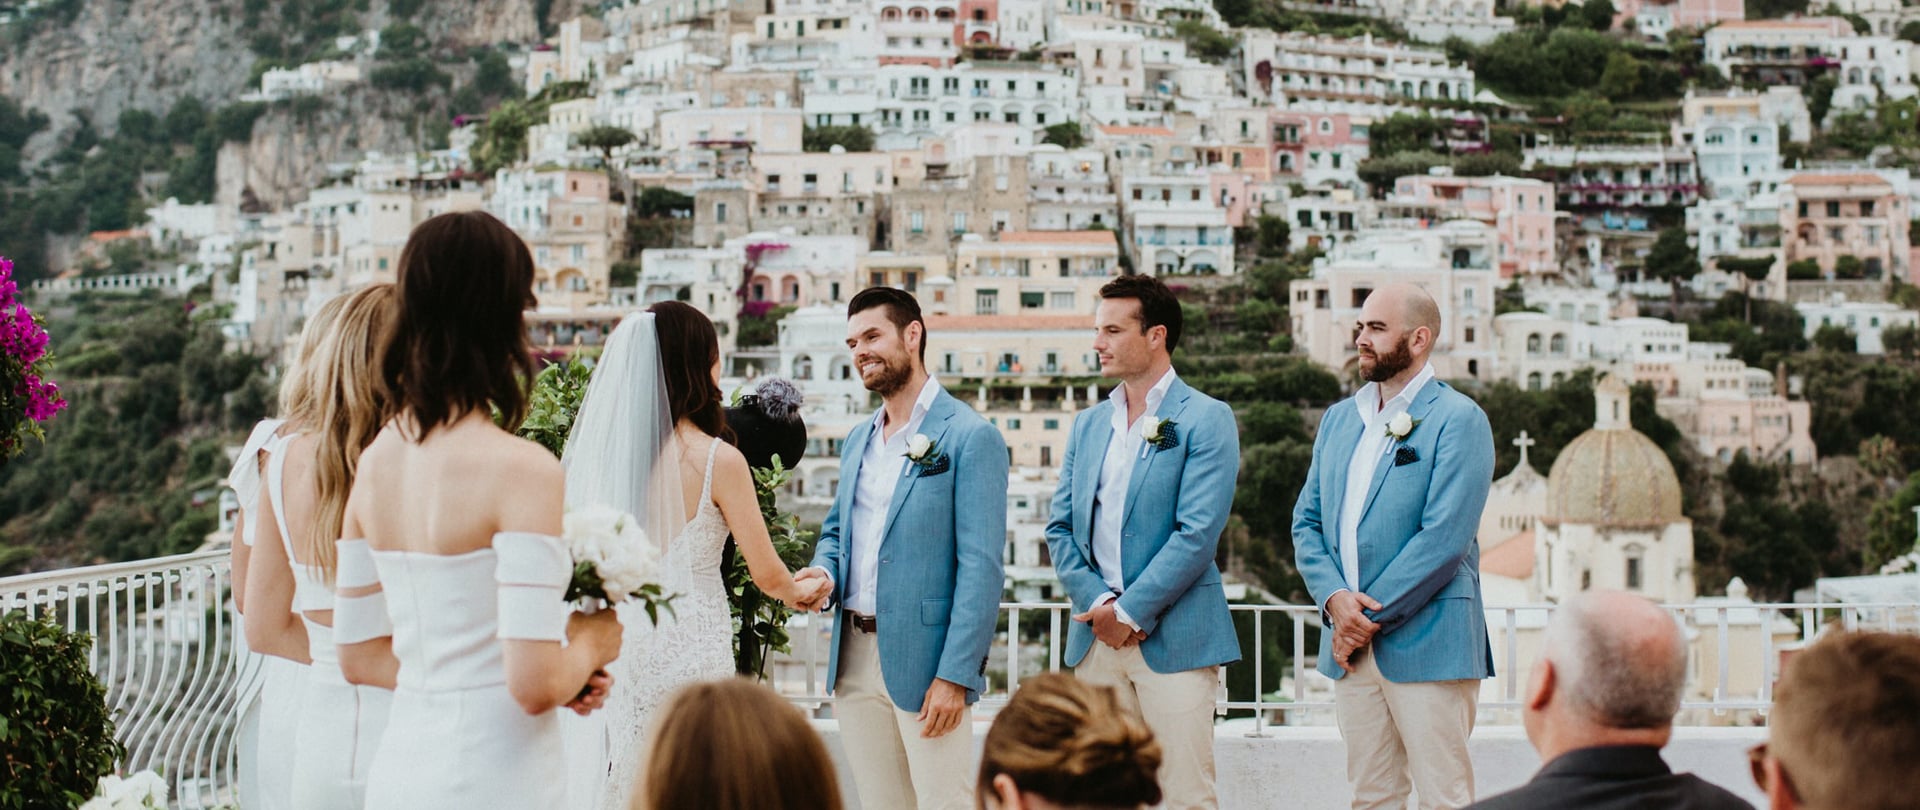 Lauren & Kenny Wedding Video Filmed at Positano, Italy